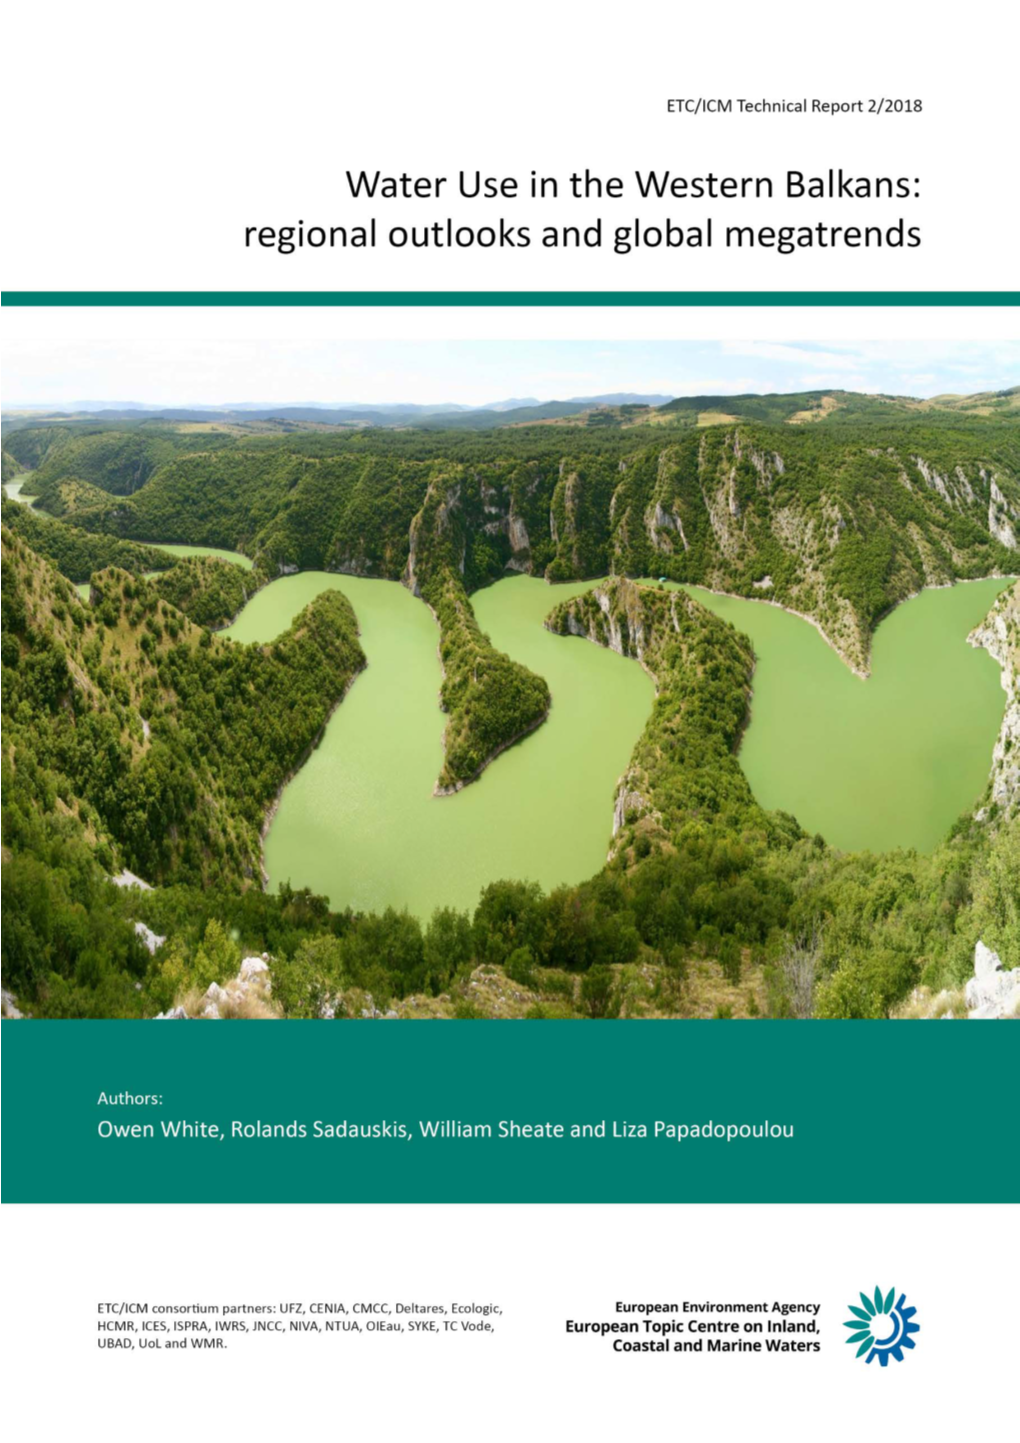 Regional Outlooks and Global Megatrends Cover Photo: Uvac River, Serbia © Photo: Gašper Šubelj, 2014